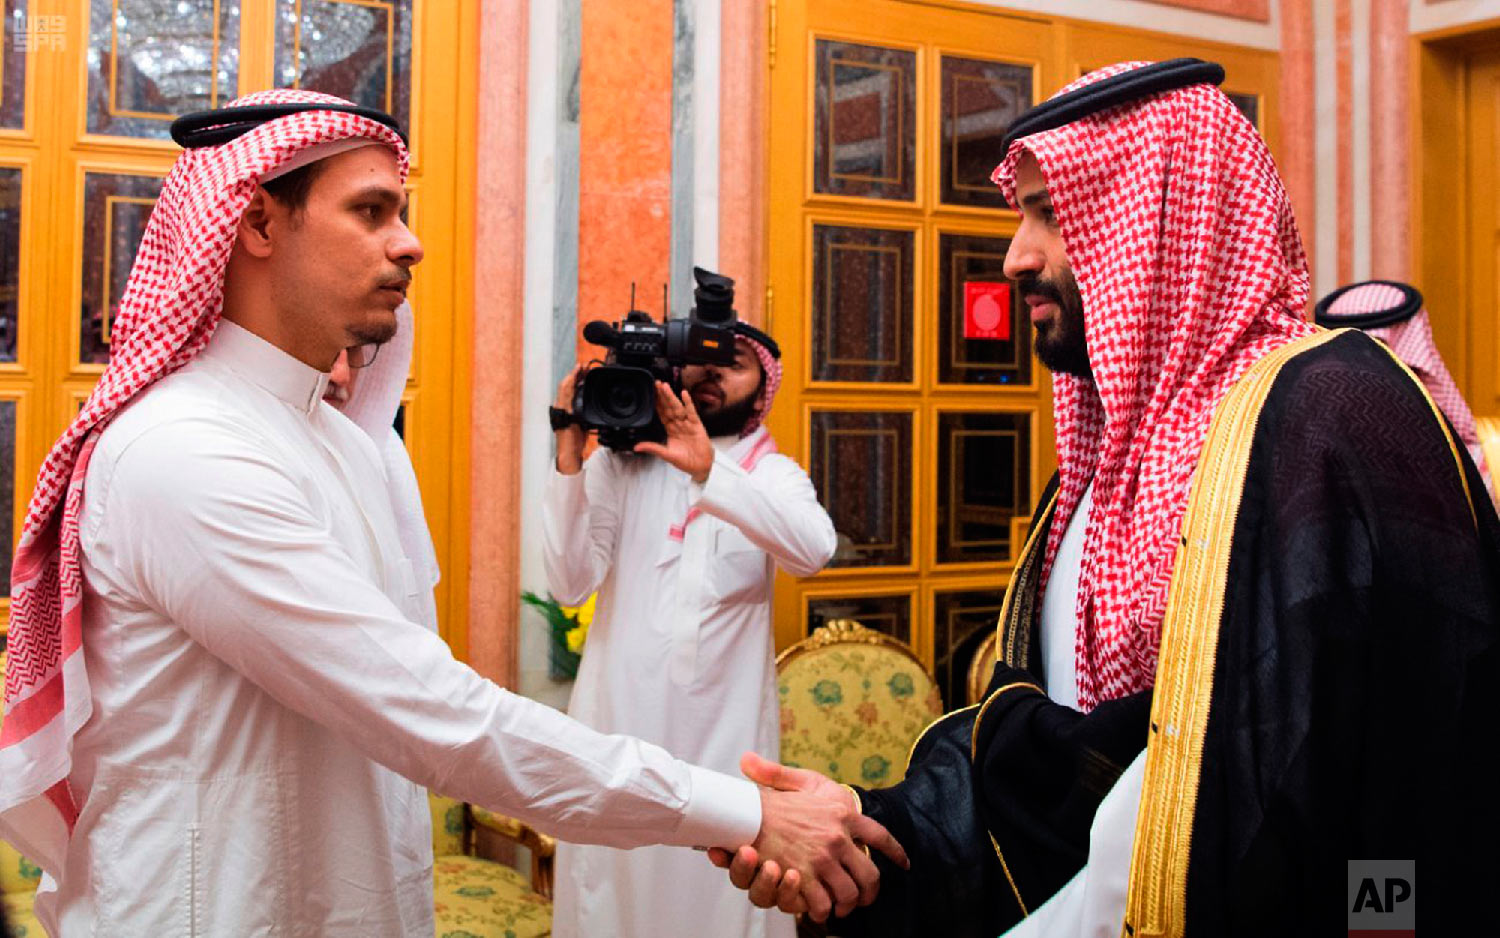  In this photo released by the Saudi Press Agency, Saudi Crown Prince Mohammed bin Salman, right, shakes hands with Salah Khashoggi, a son of Jamal Khashoggi, in Riyadh, Saudi Arabia, on Oct. 23, 2018. The meeting came just days after Saudi Arabia ac